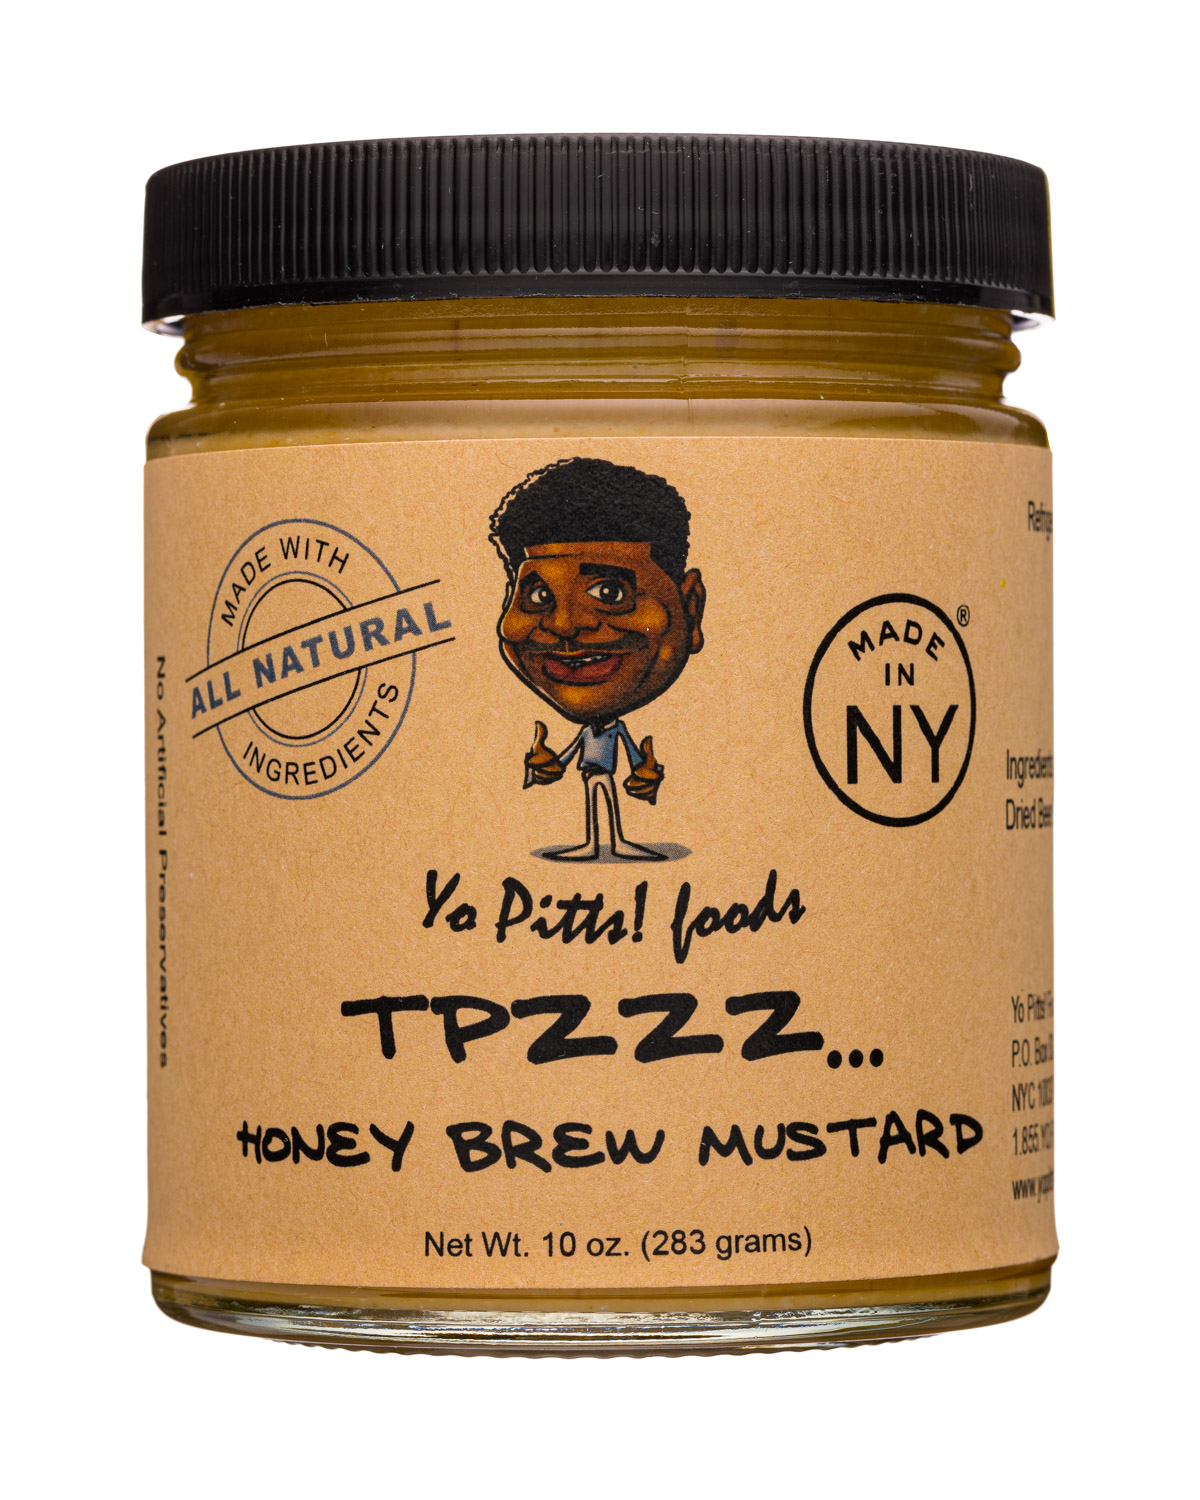 TPzzz Honey Brew Mustard 